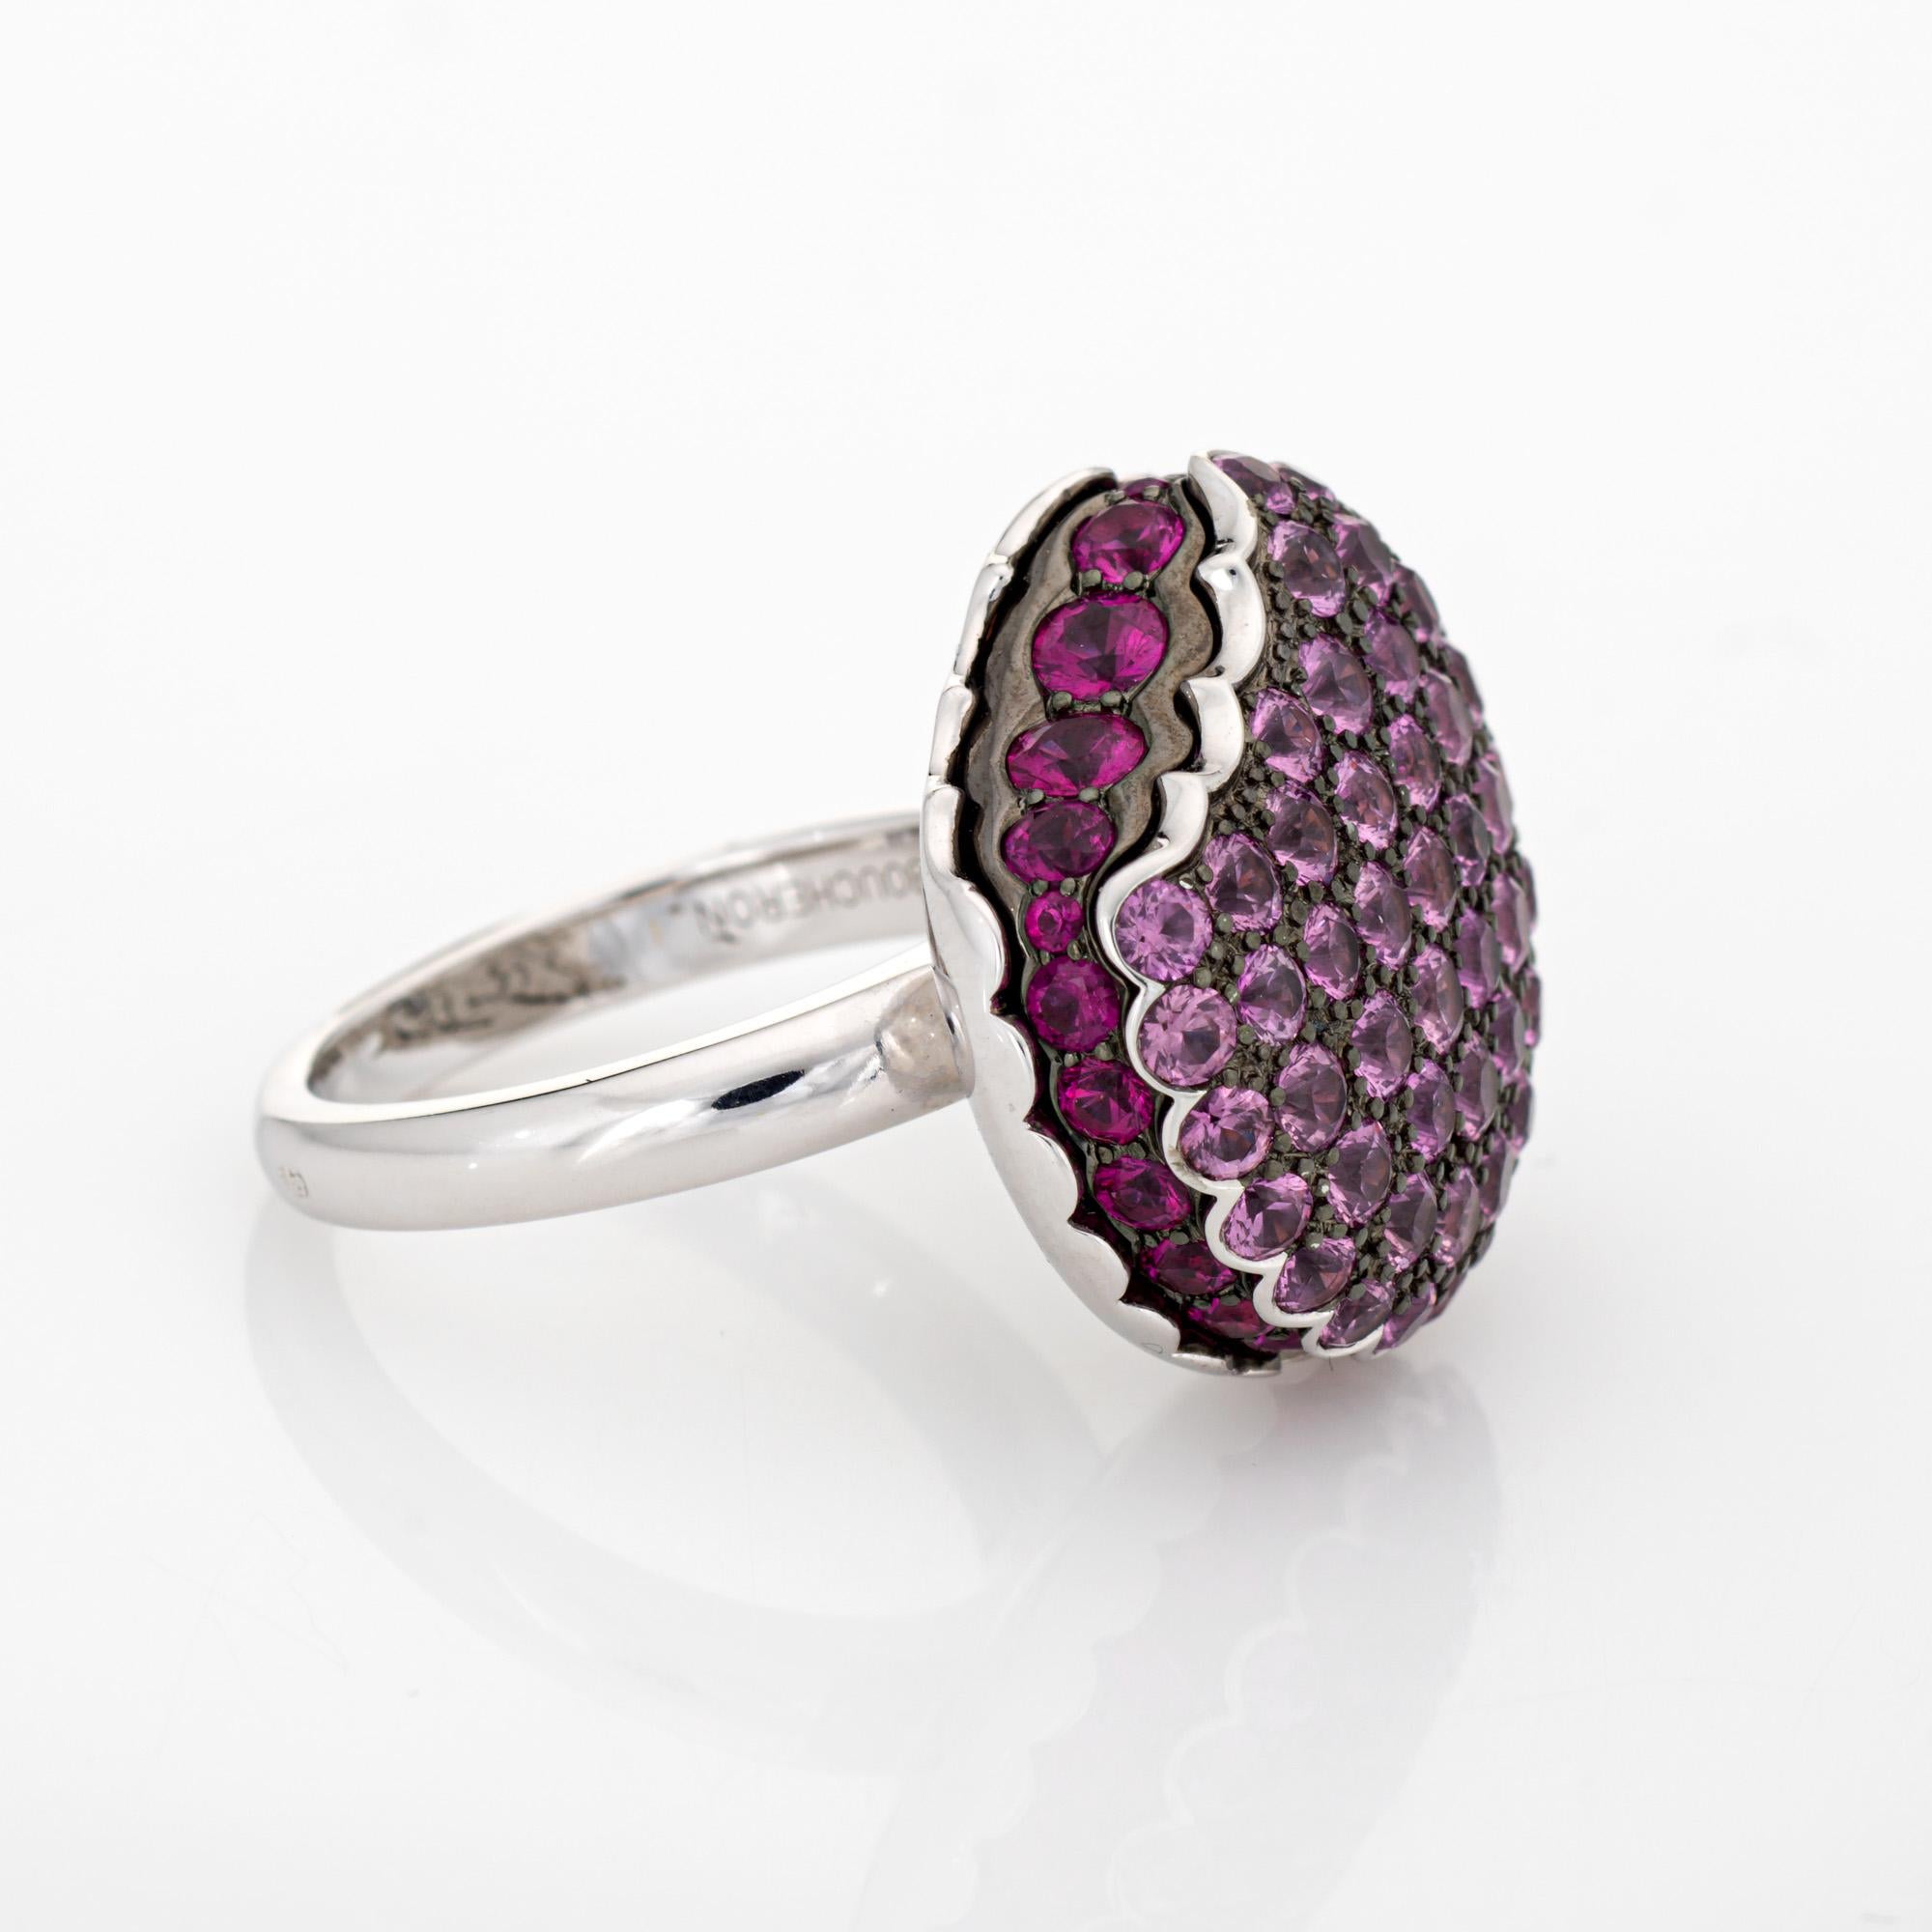 Contemporary Boucheron Macaron Ring Pink Sapphire Ruby Tentation 6.25 Estate Fine Jewelry